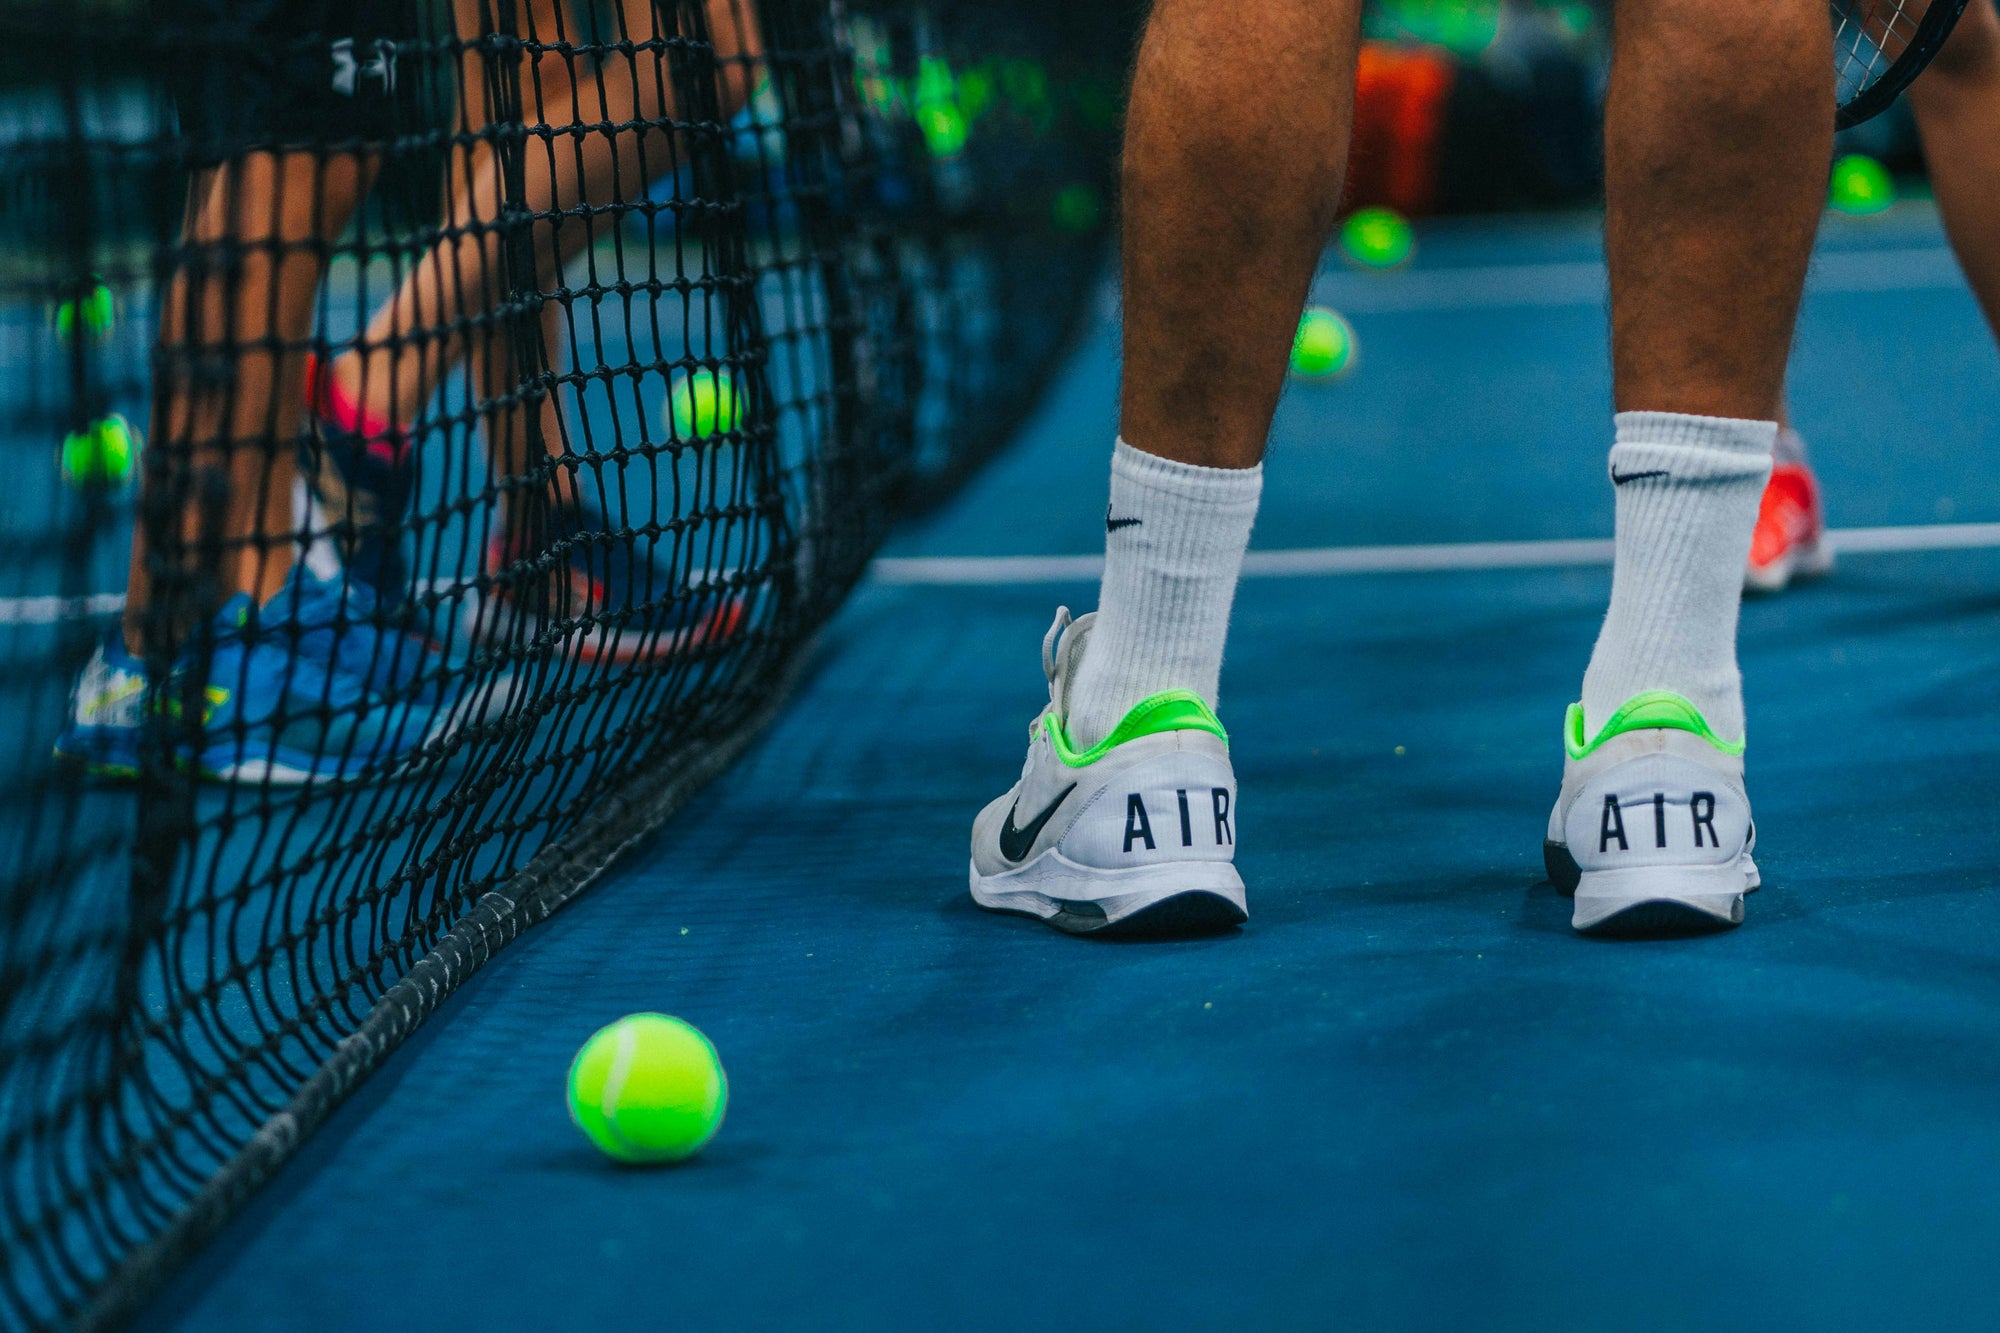 Men's tennis shoes by the court net